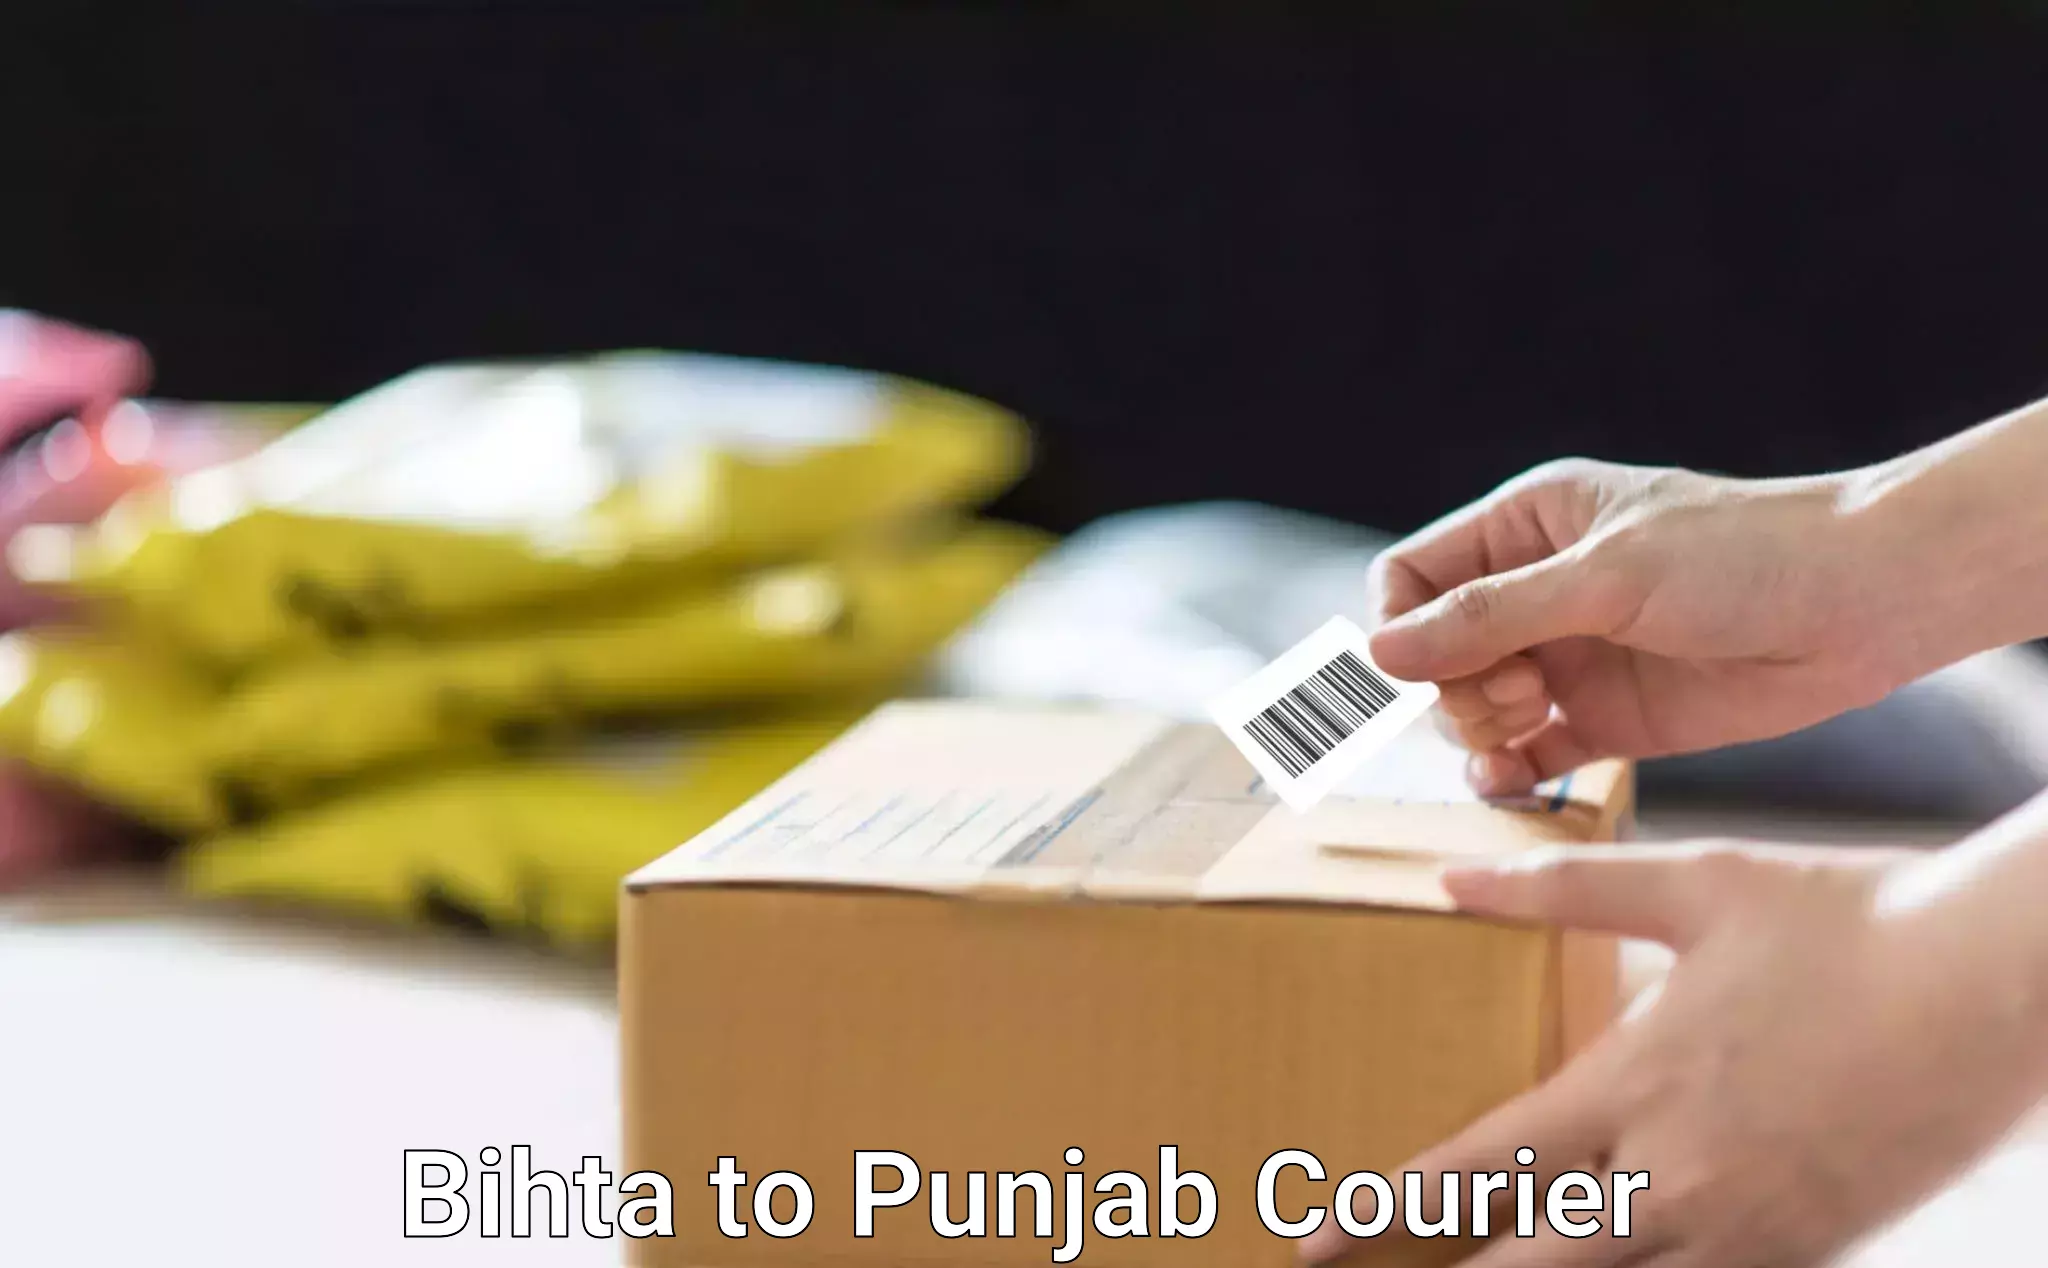 Household movers Bihta to Punjab